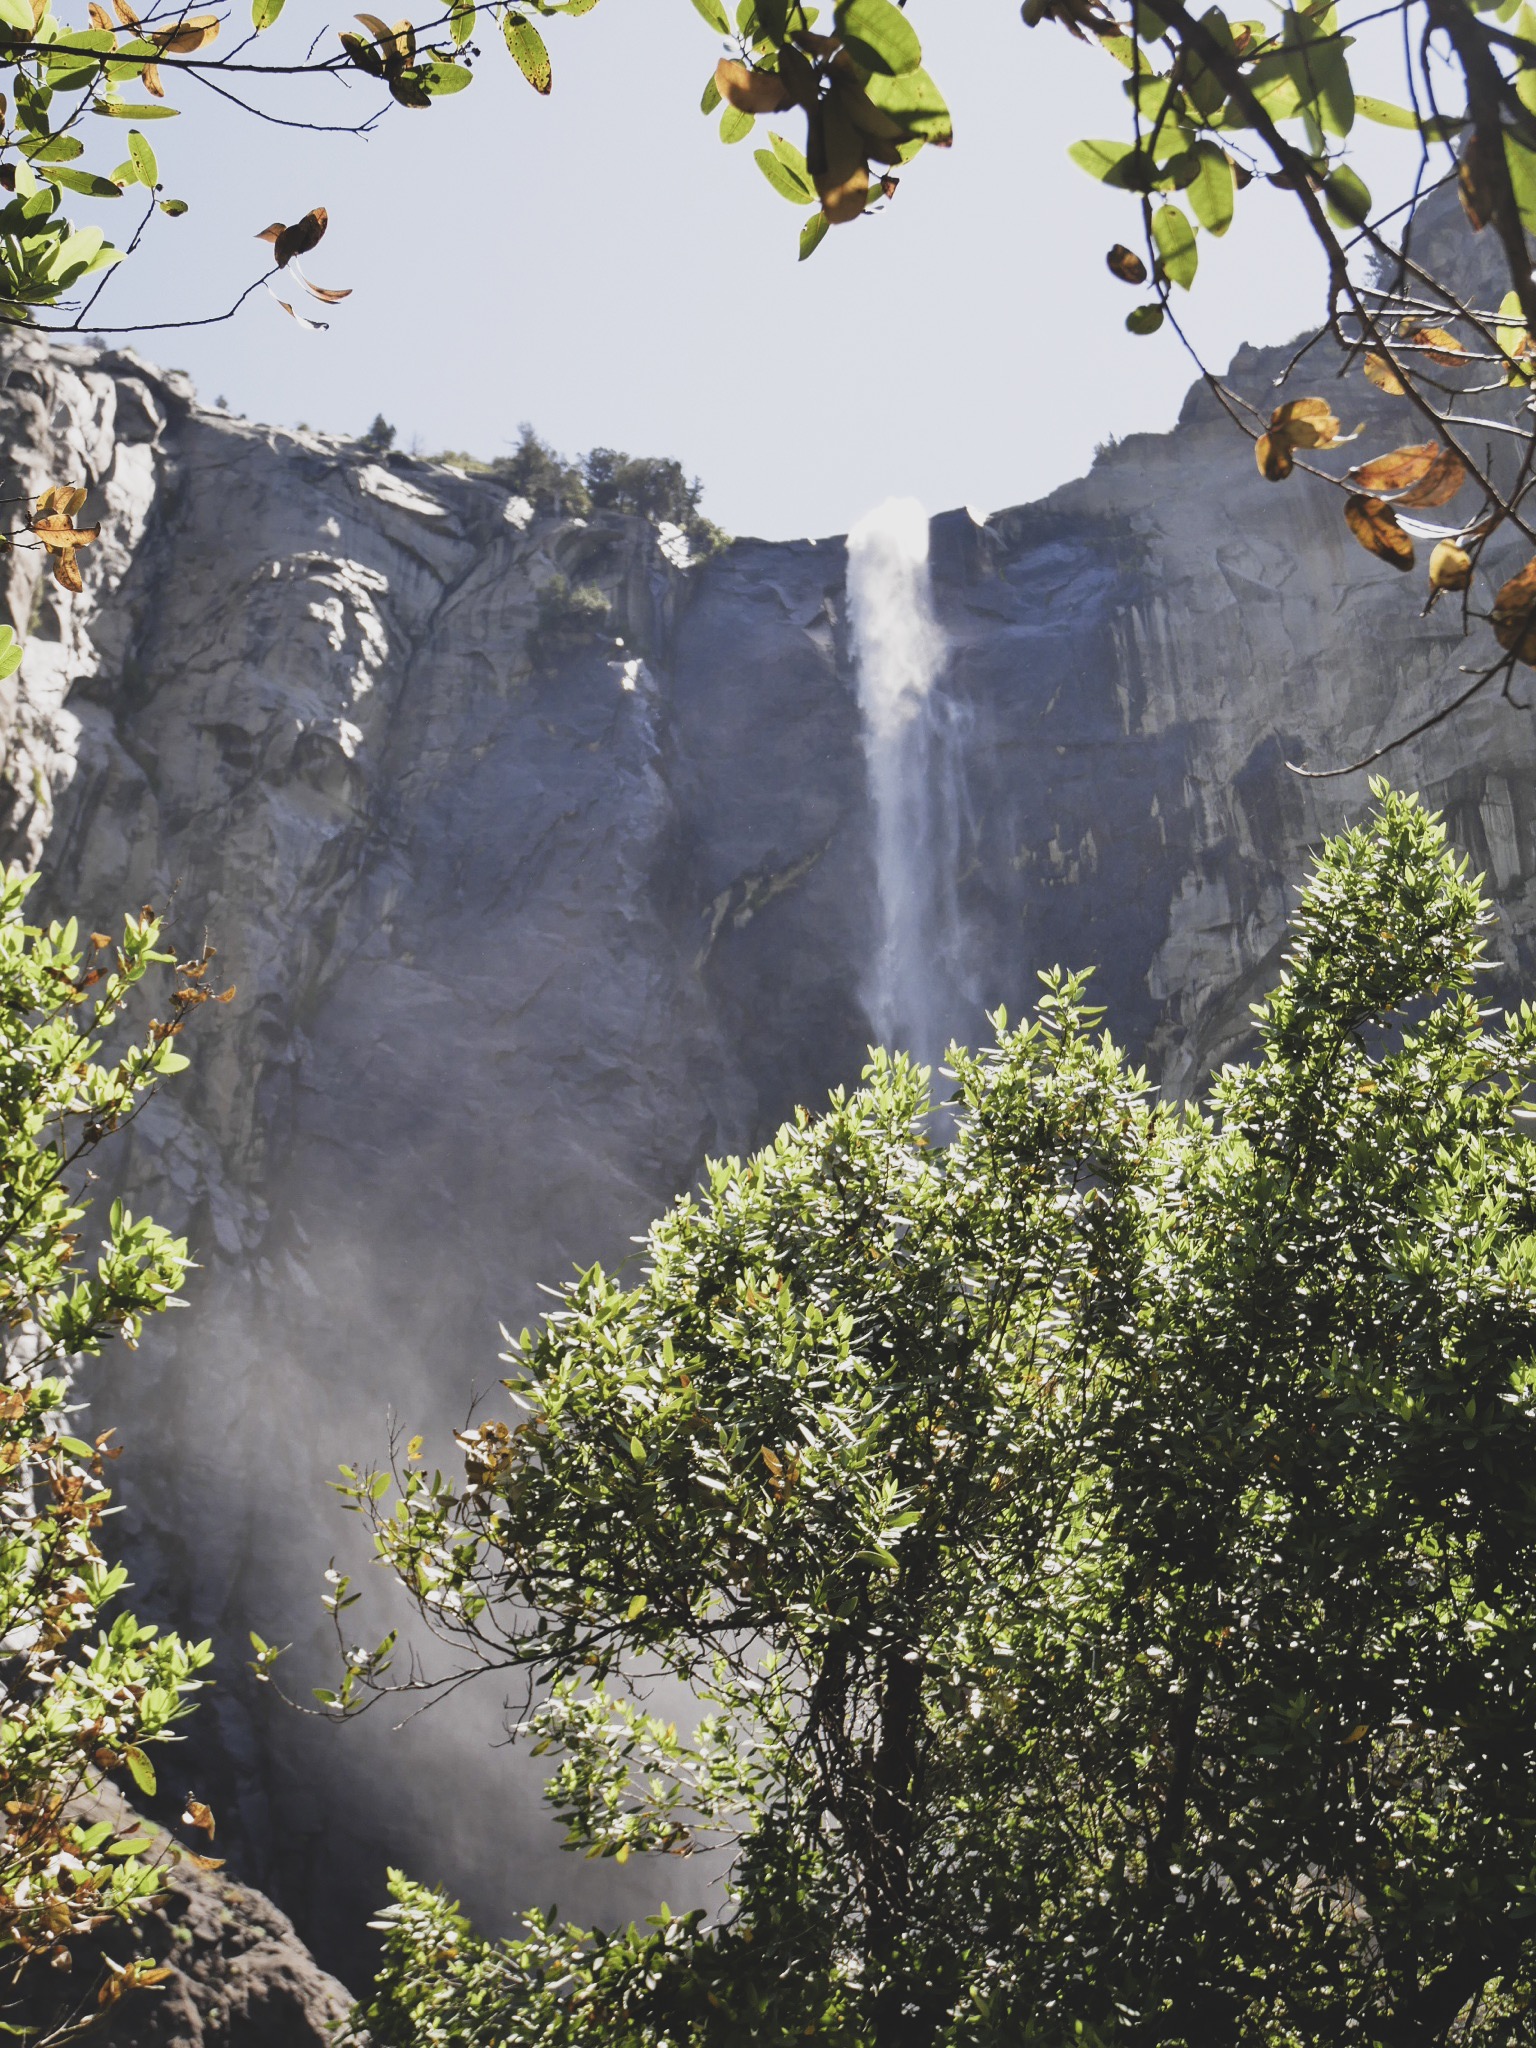 Yosemite National Park: 2-Day Itinerary